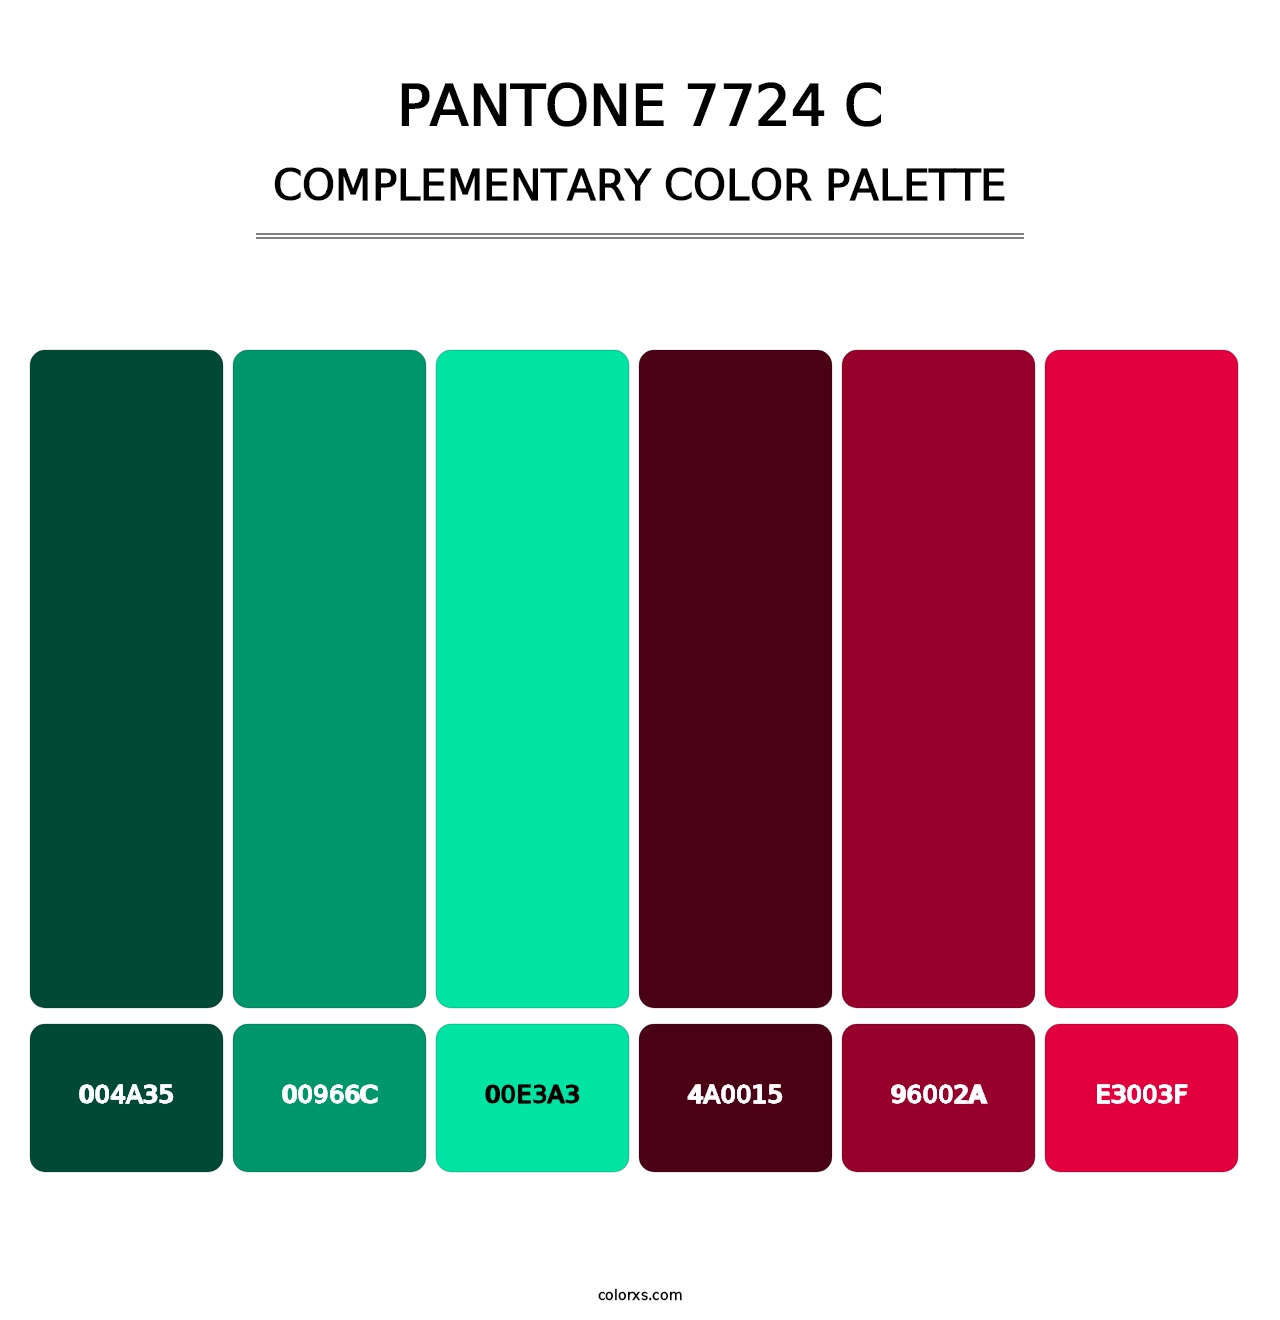 PANTONE 7724 C - Complementary Color Palette